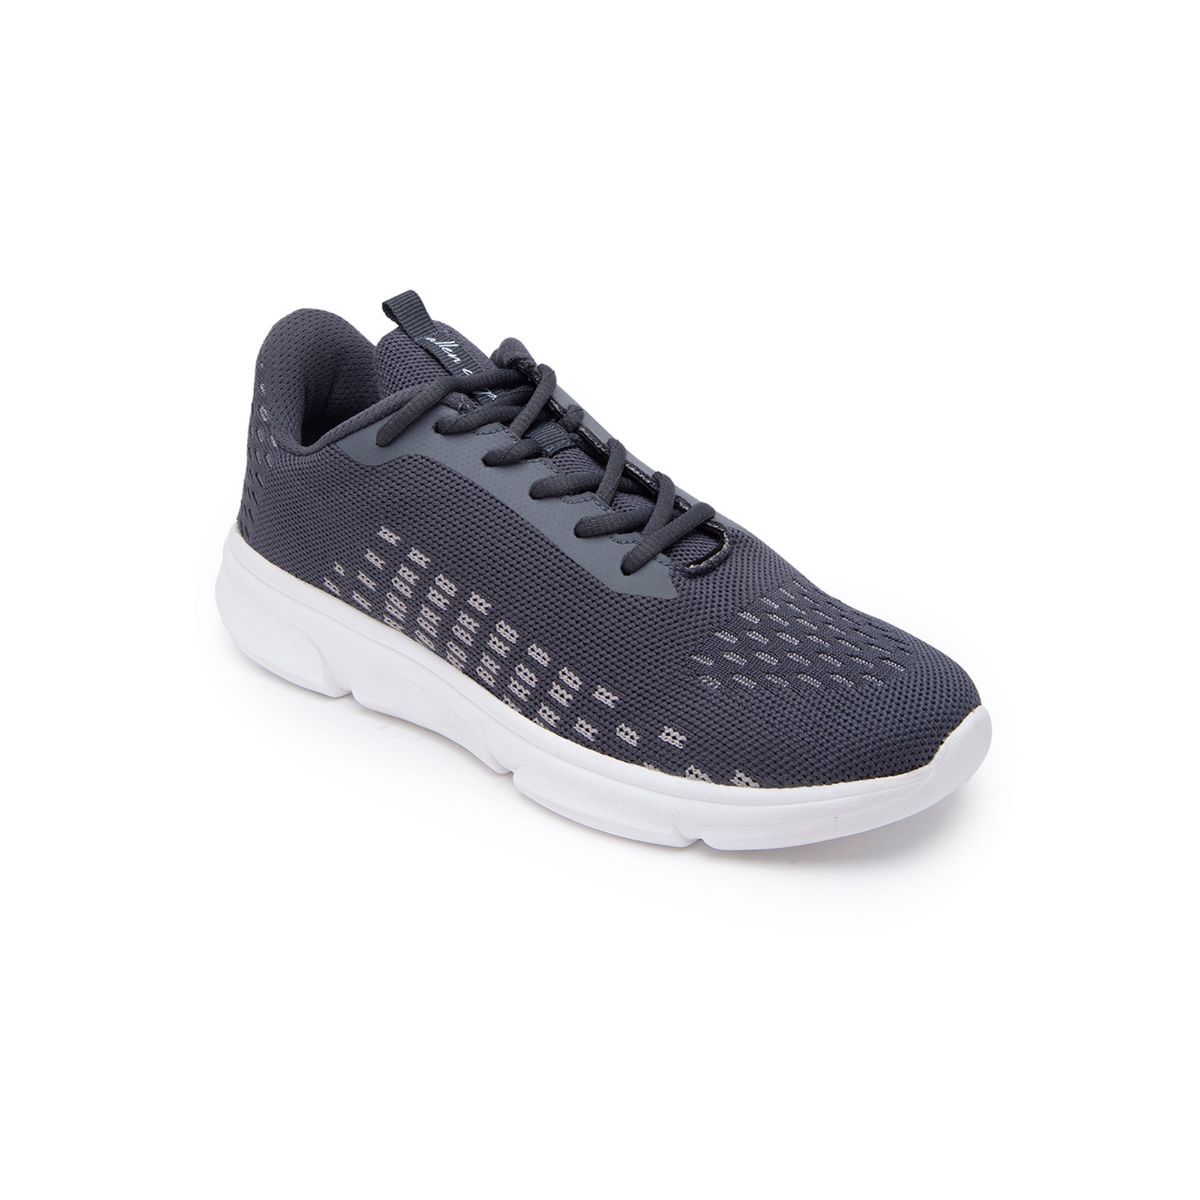 Allen Cooper Grey Mesh Sports Shoes - 10